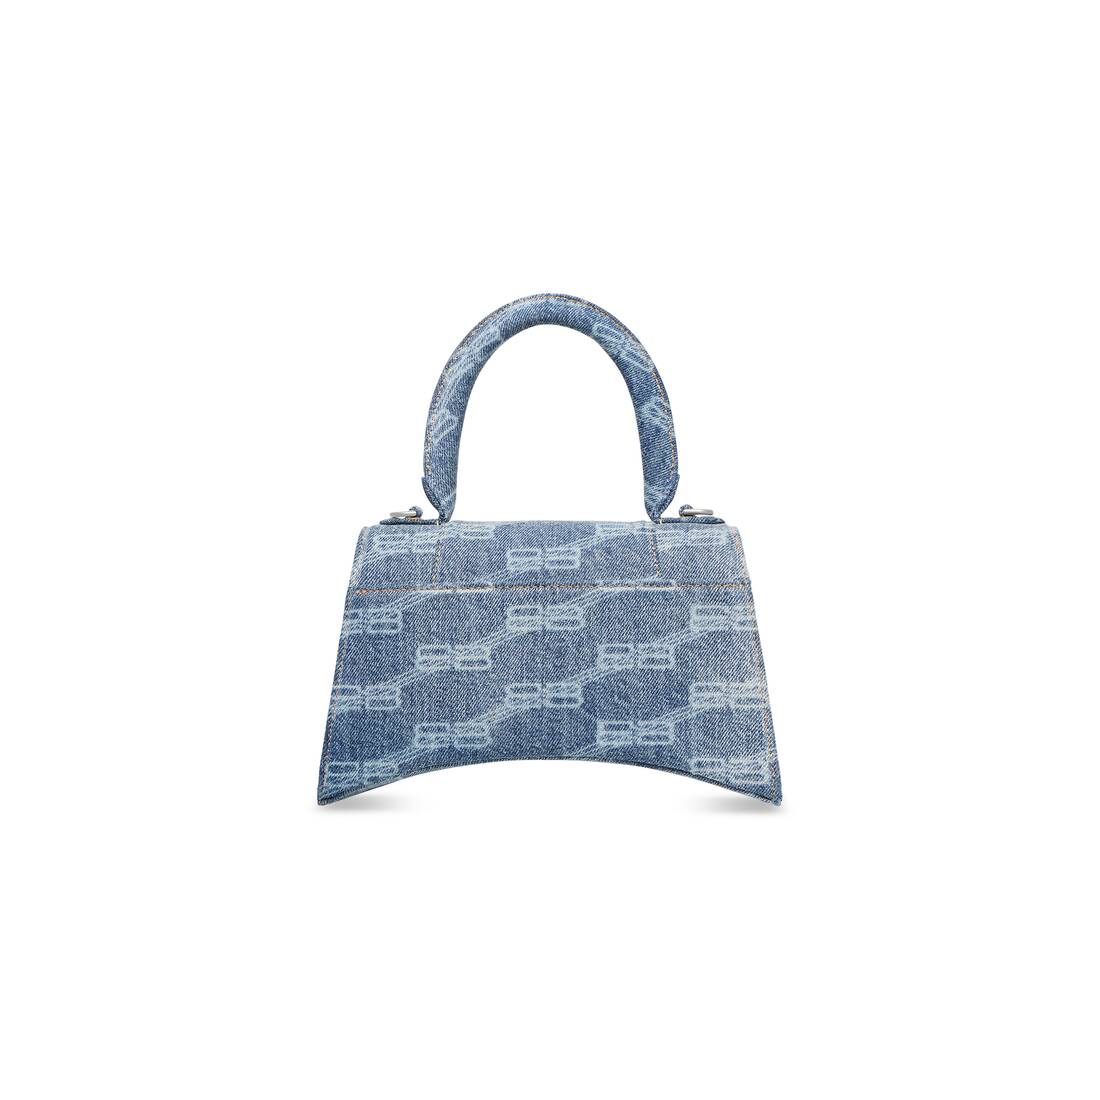 Hourglass Mini Embellished Suede Tote Bag in Blue - Balenciaga